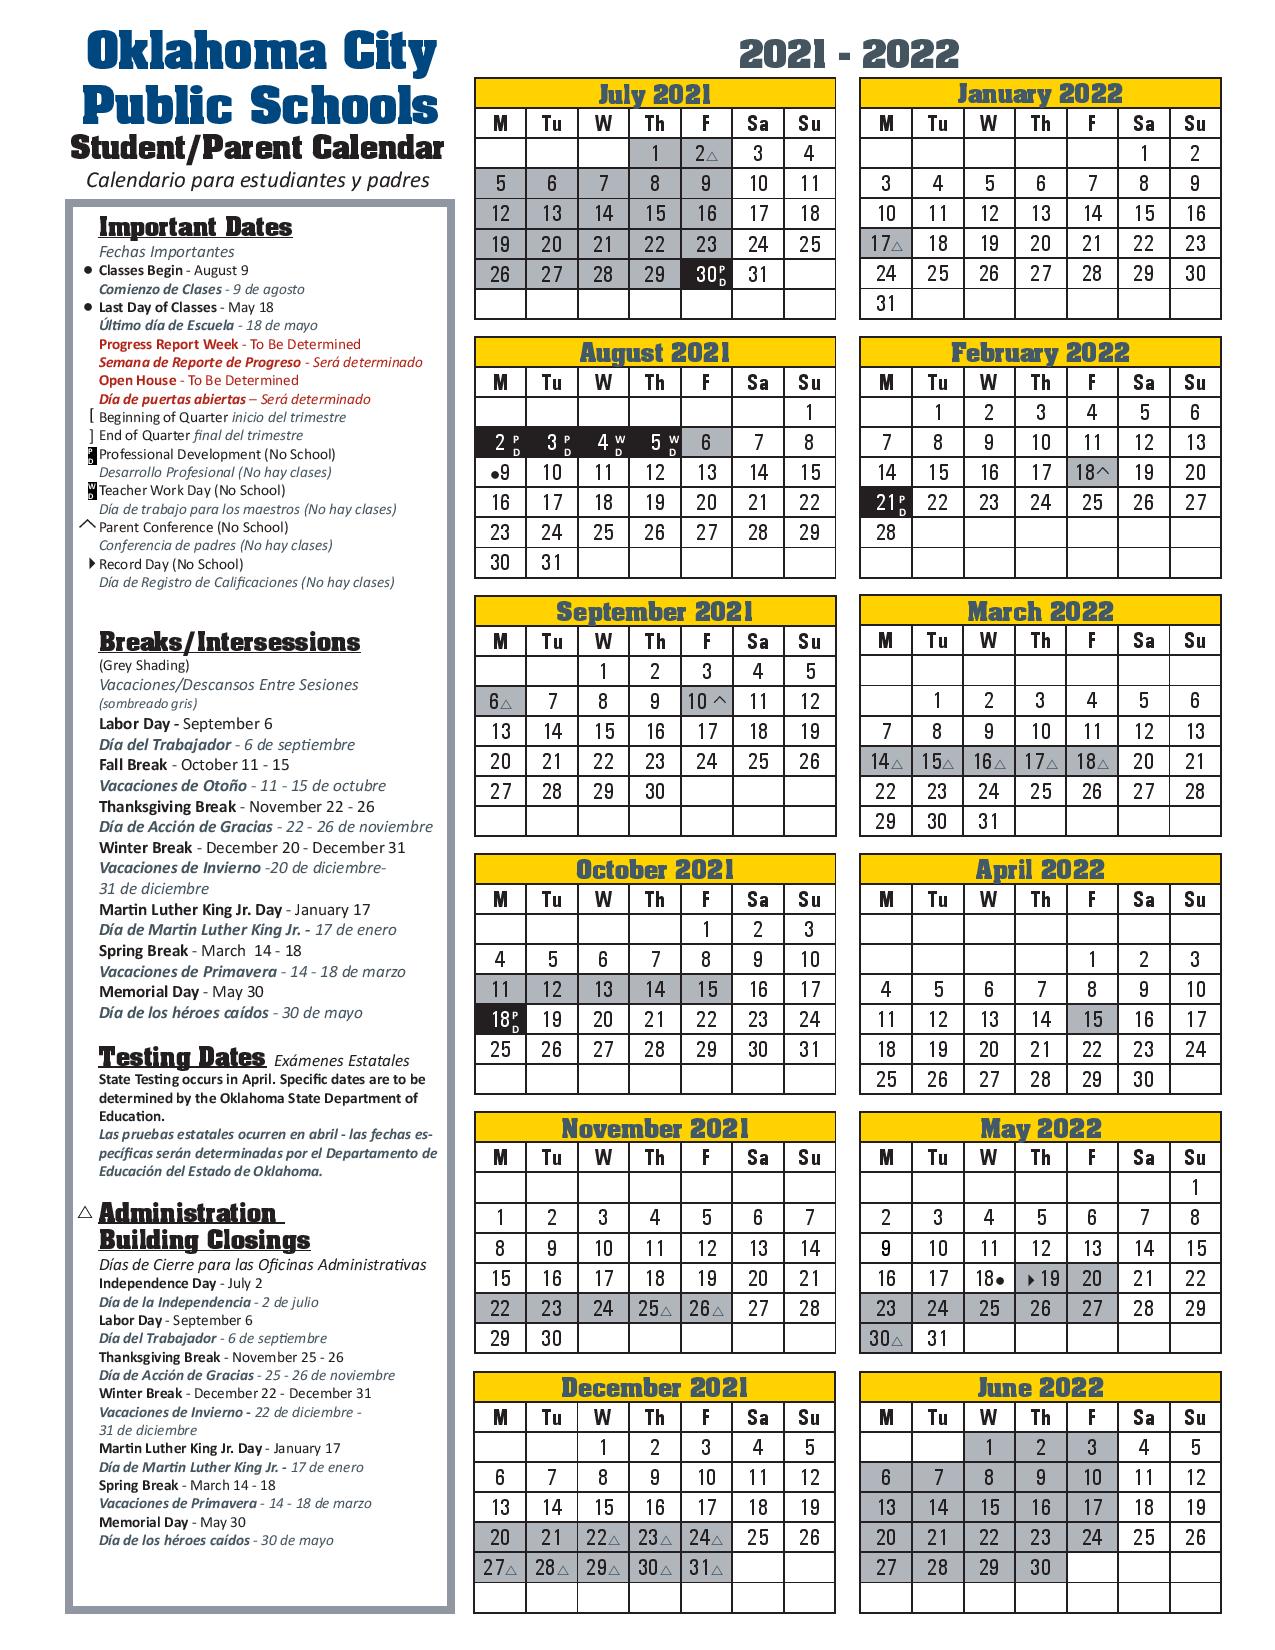 Okcps Calendar 2022 2023 Oklahoma City Public Schools Calendar 2021-2022 In Pdf